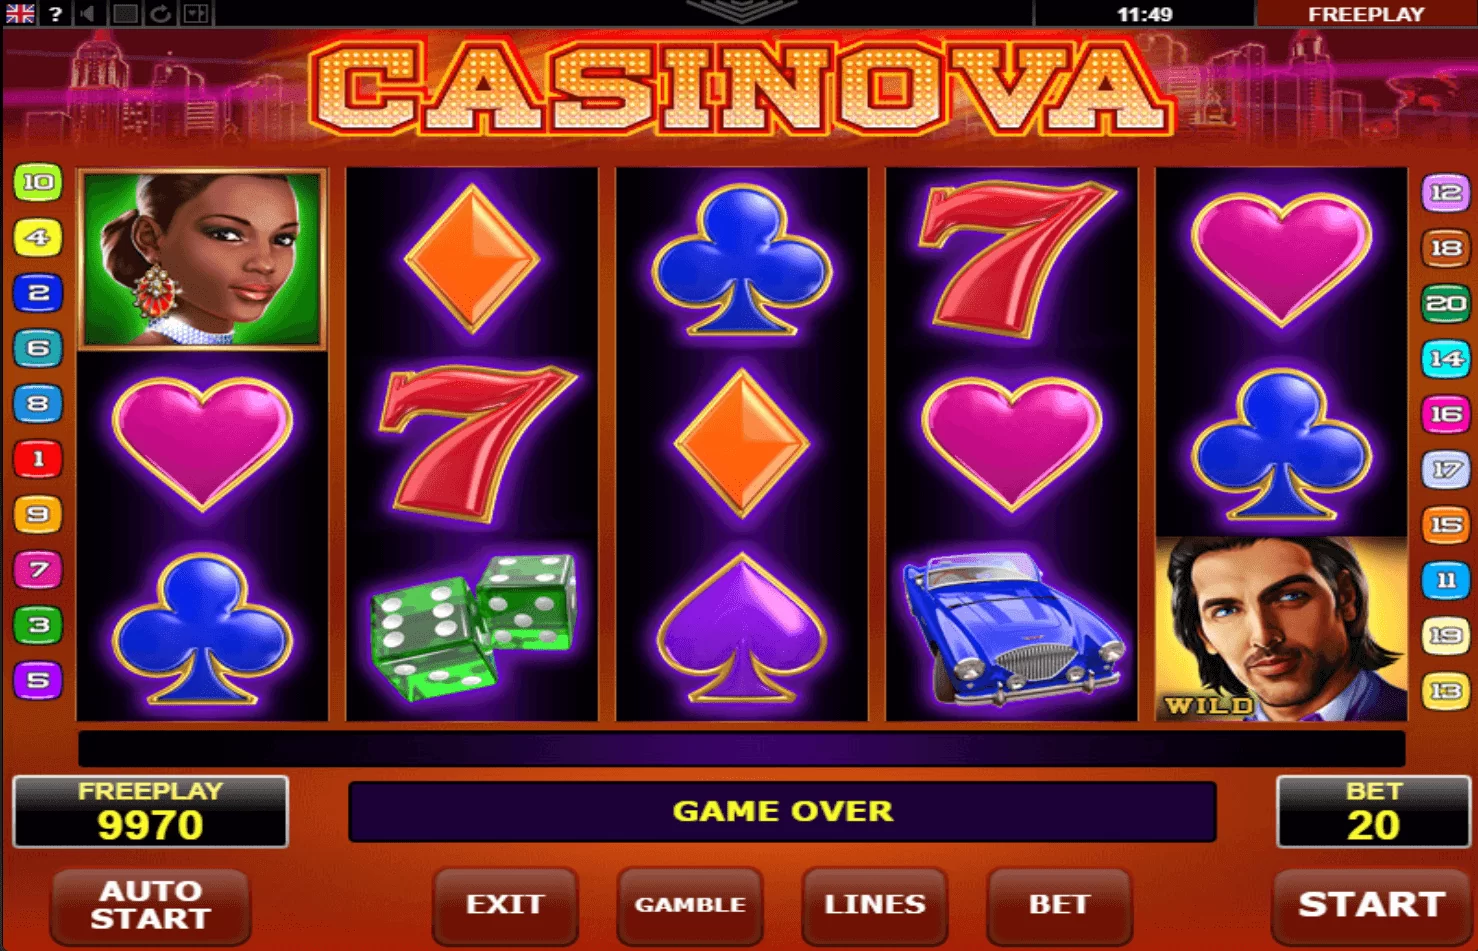 Casinova slot: Play with $100 Free Bonus! - YummySpins